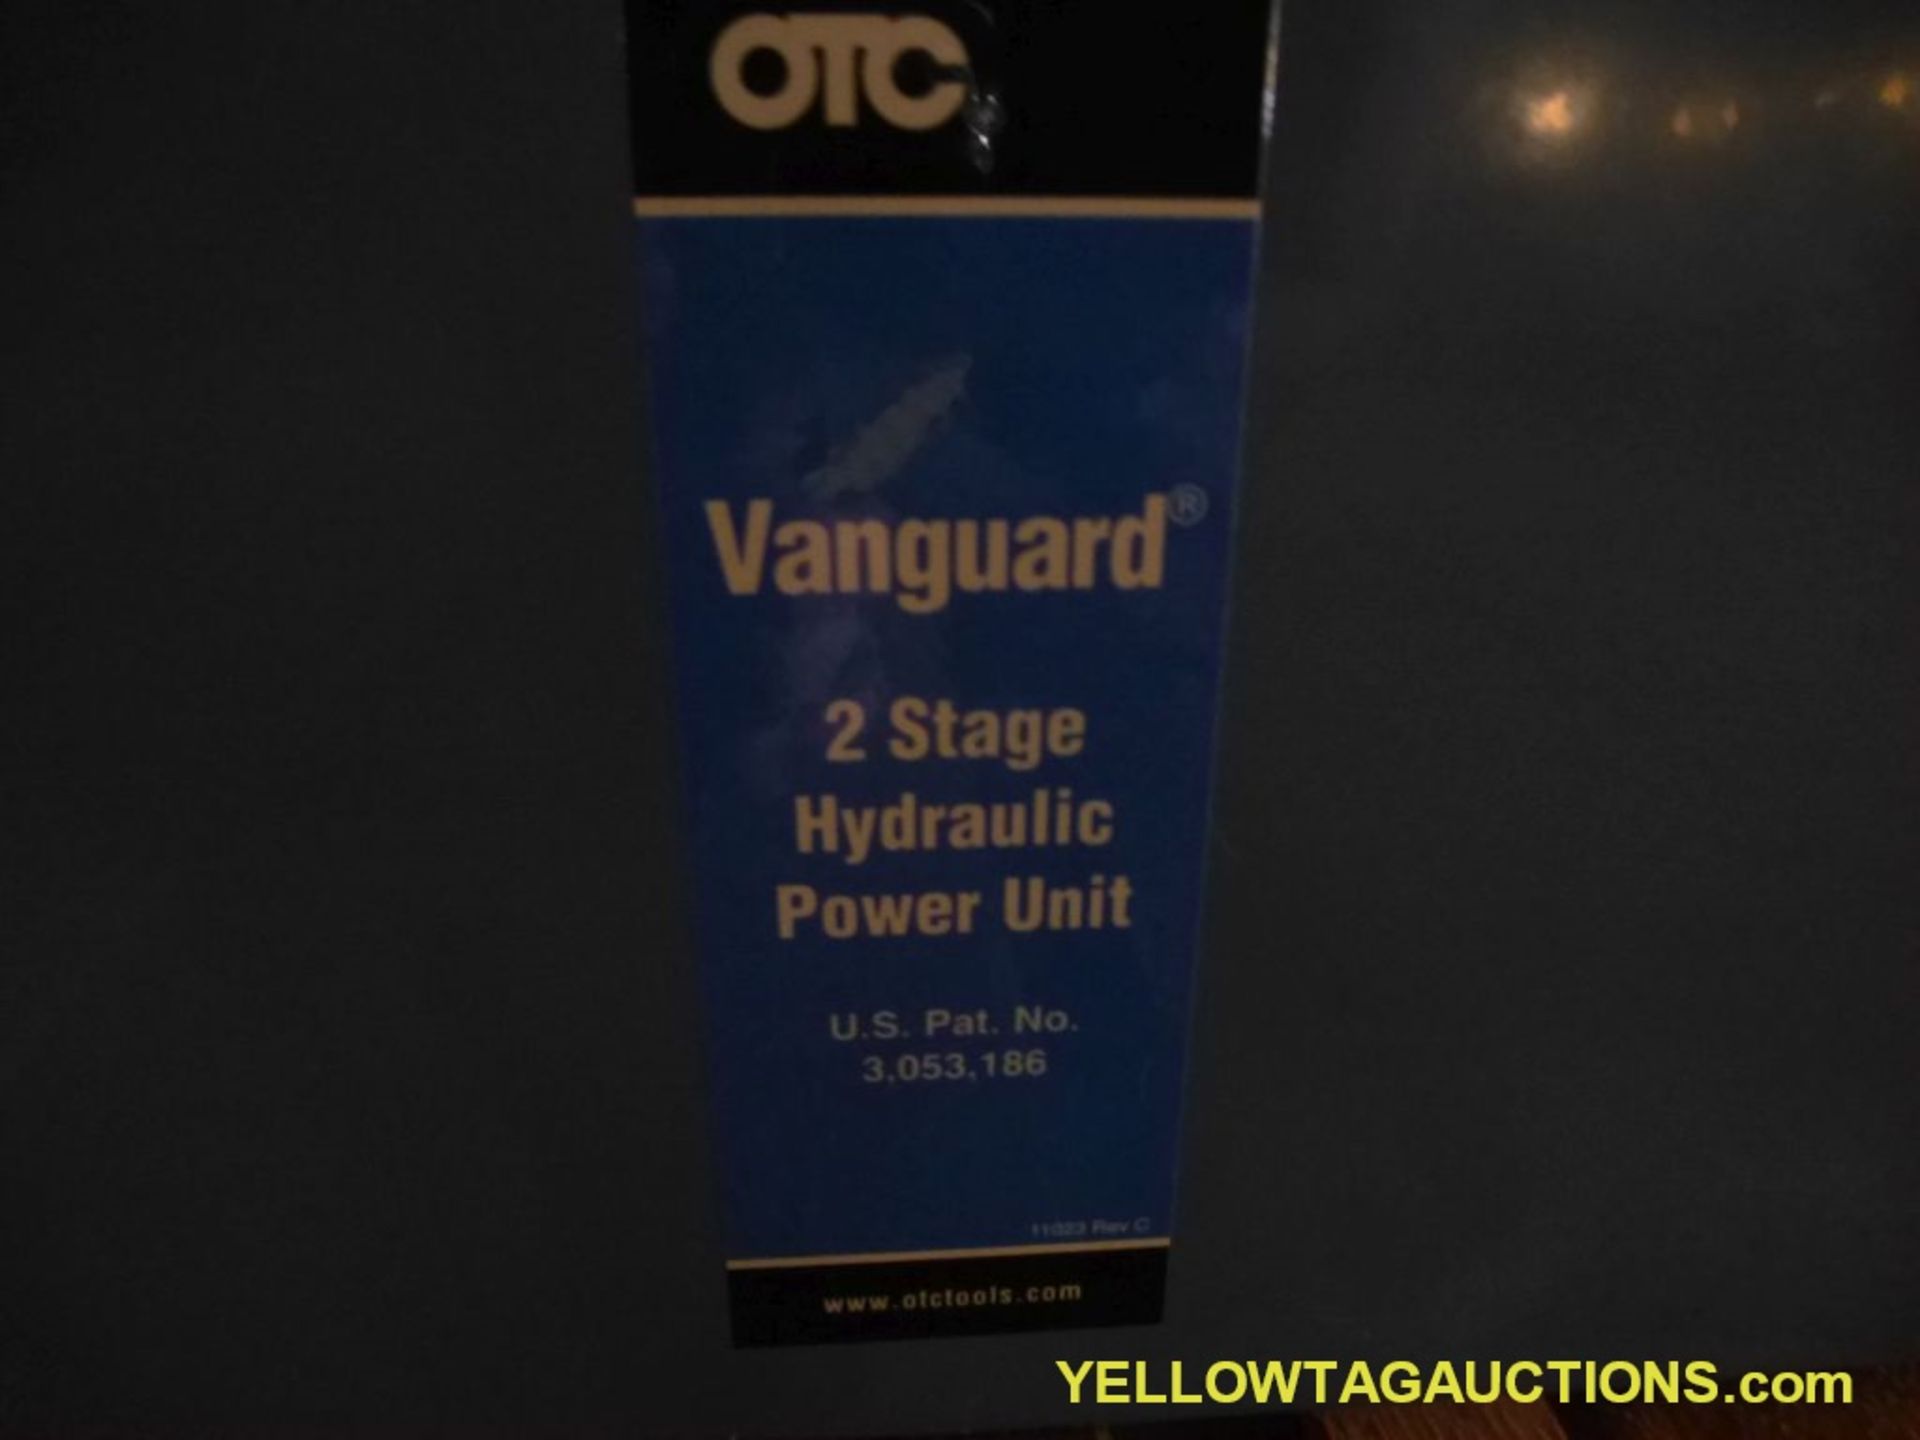 Vanguard 2 Stage Hydraulic Power Unit - Single Phase; New Surplus - Image 4 of 4